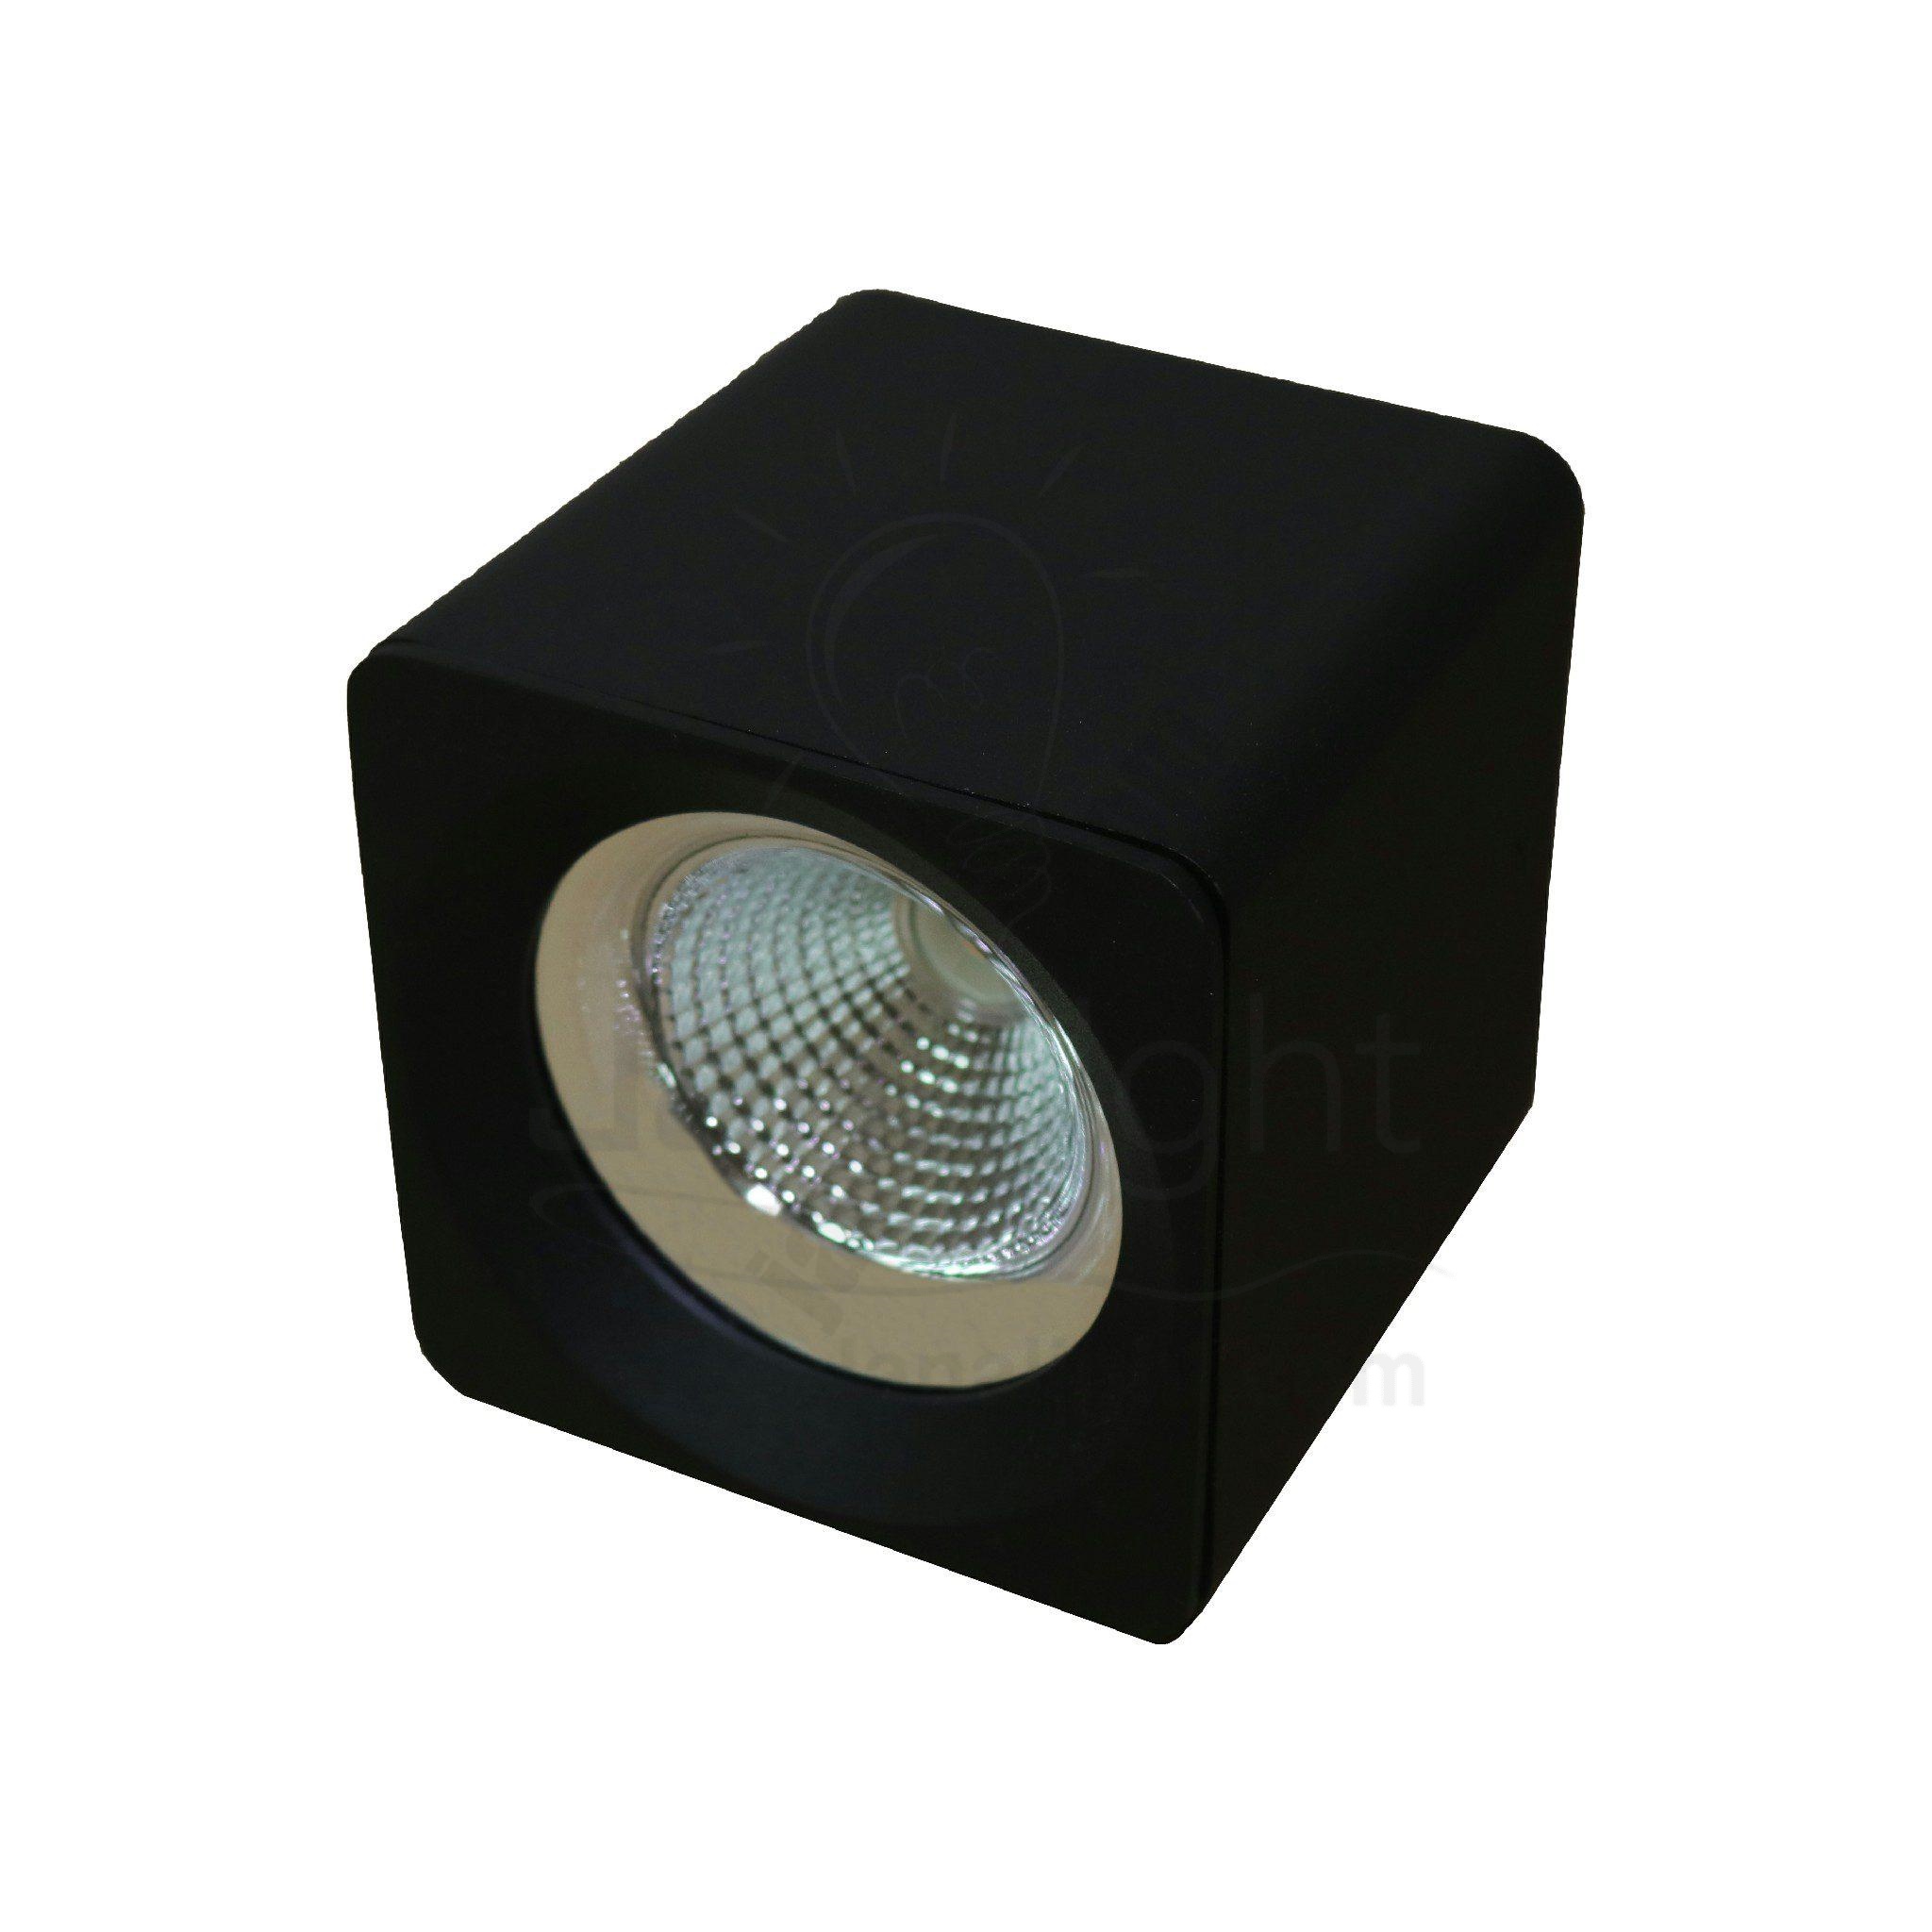 سبوت لايت سلندر 10 وات مربع اسود خارجي COB ايميكا black square cylinder spotlight prominent 10 watt emeca COB